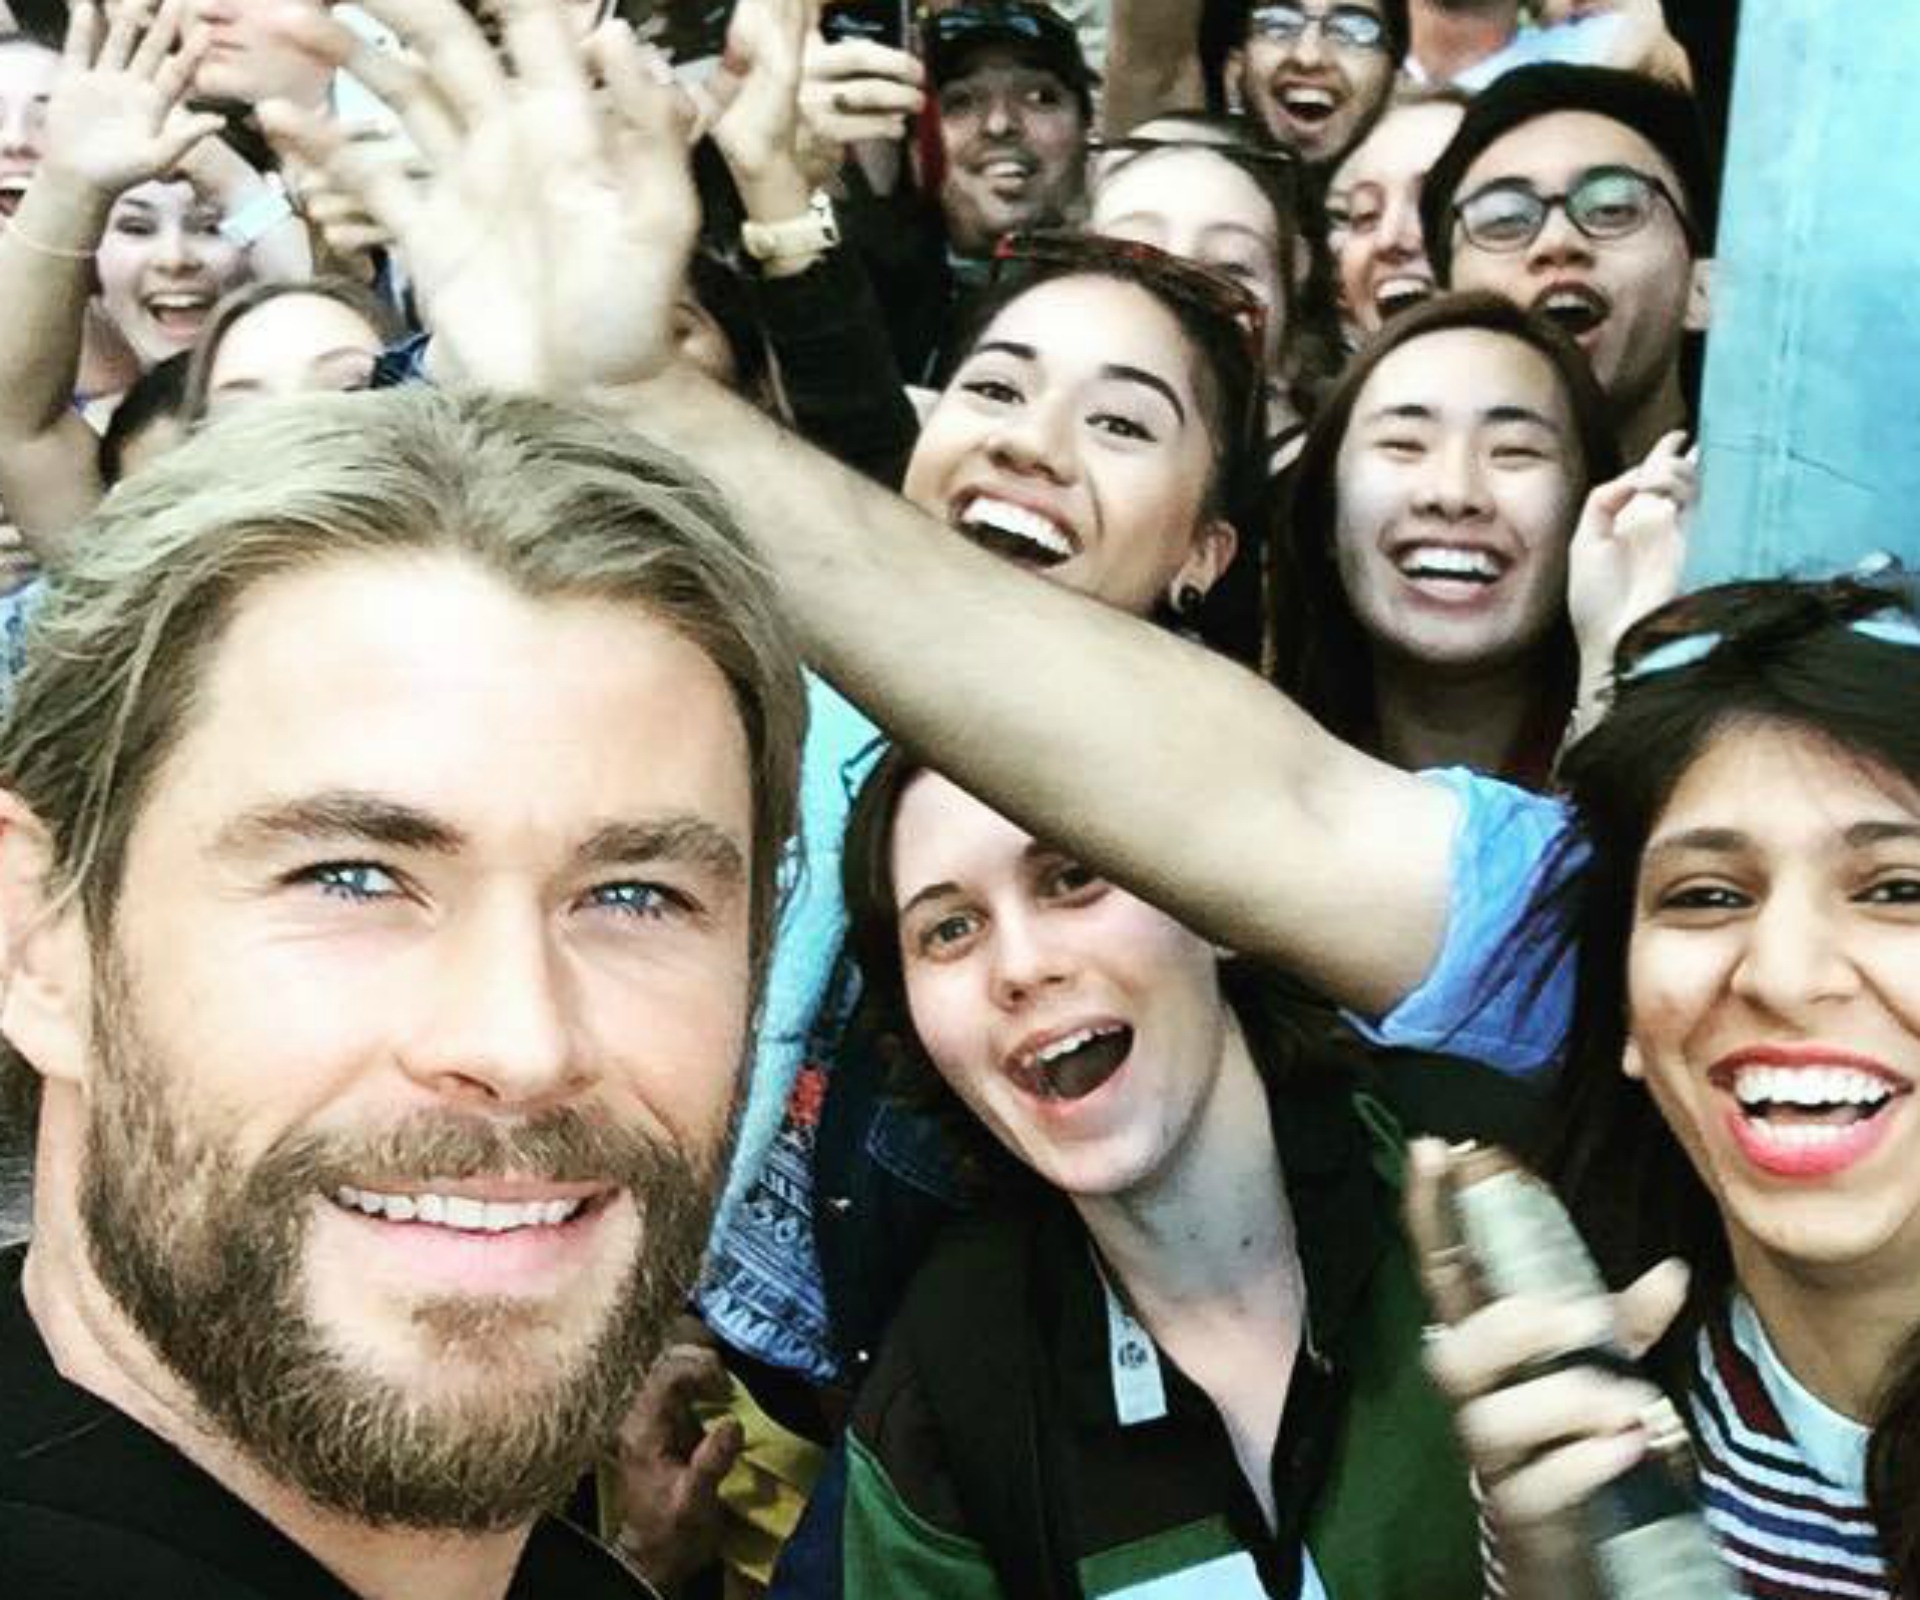 Chris Hemsworth is making everyone’s day in Brisbane